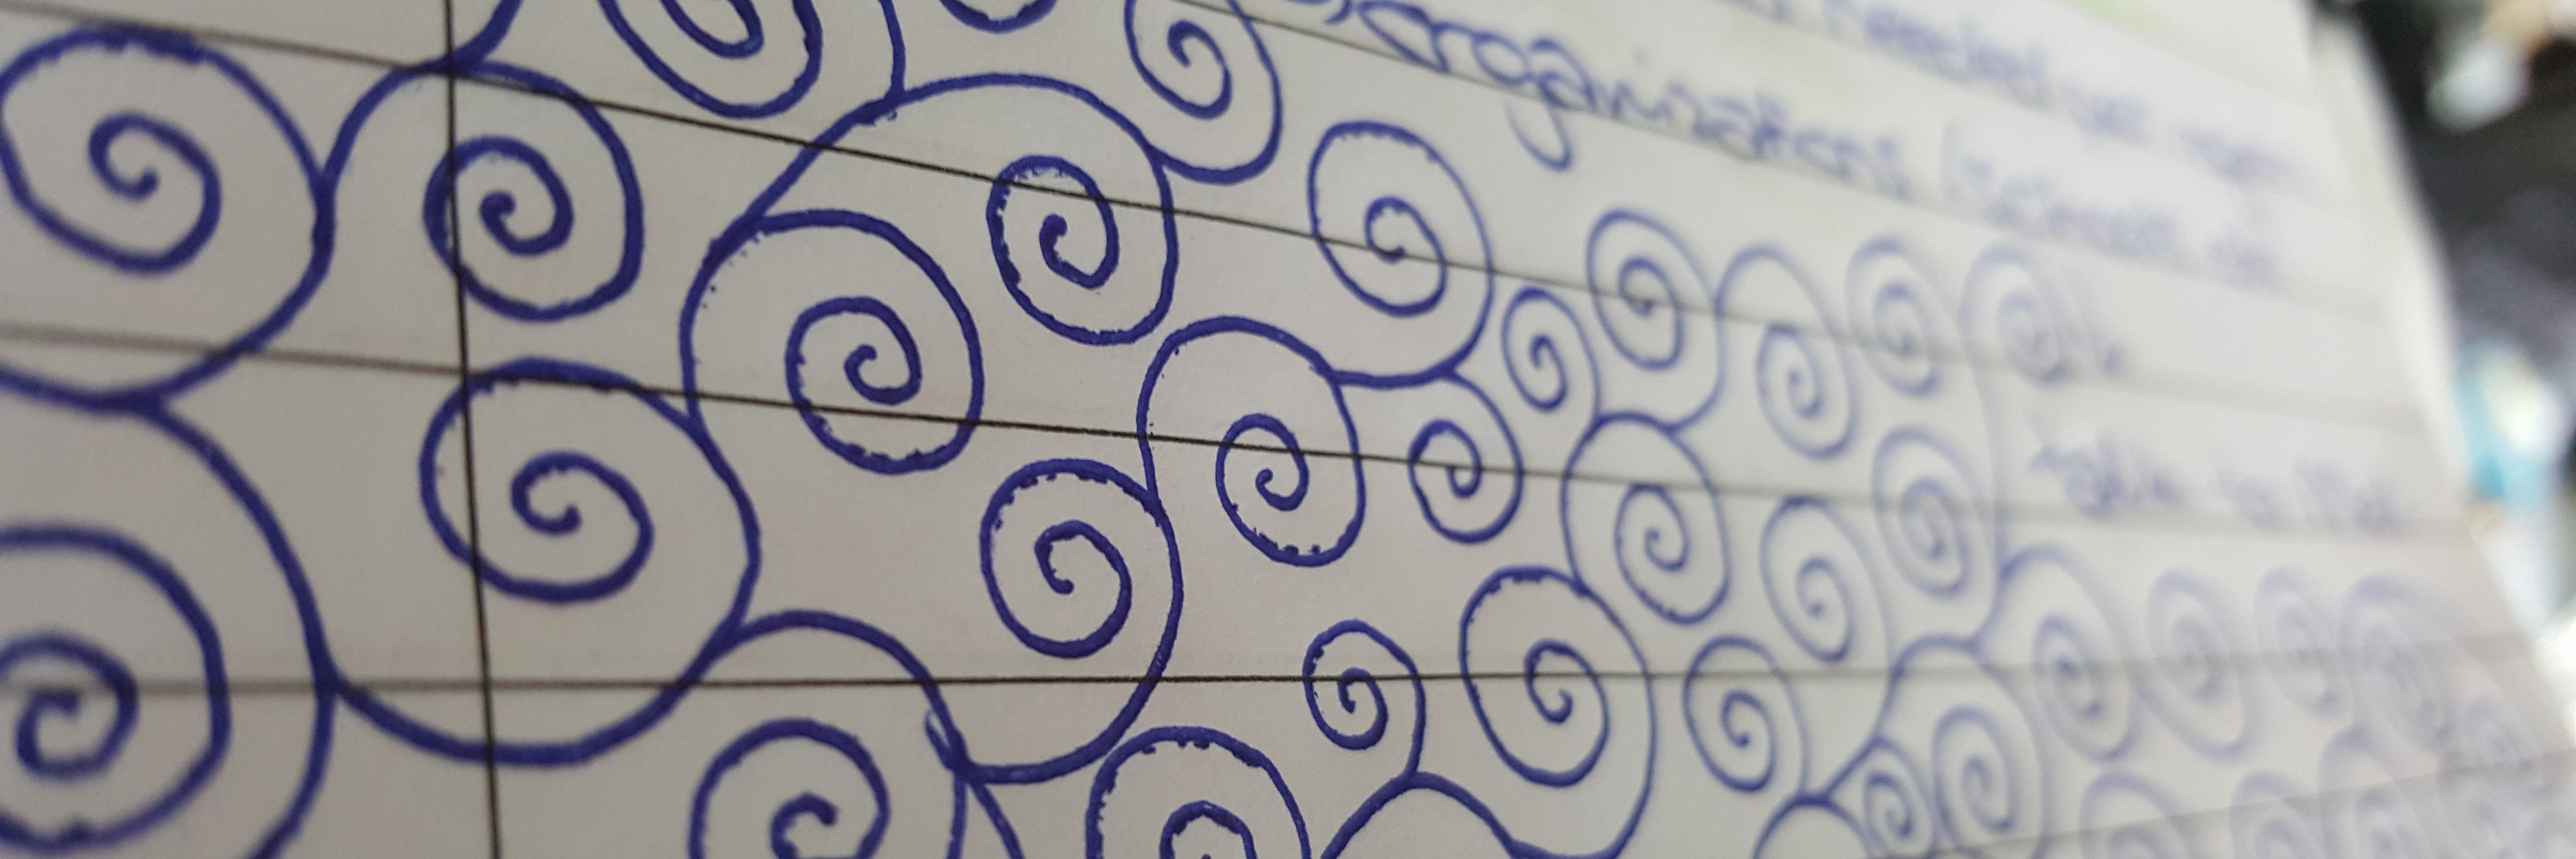 spiral doodles in blue pen in lined notebook